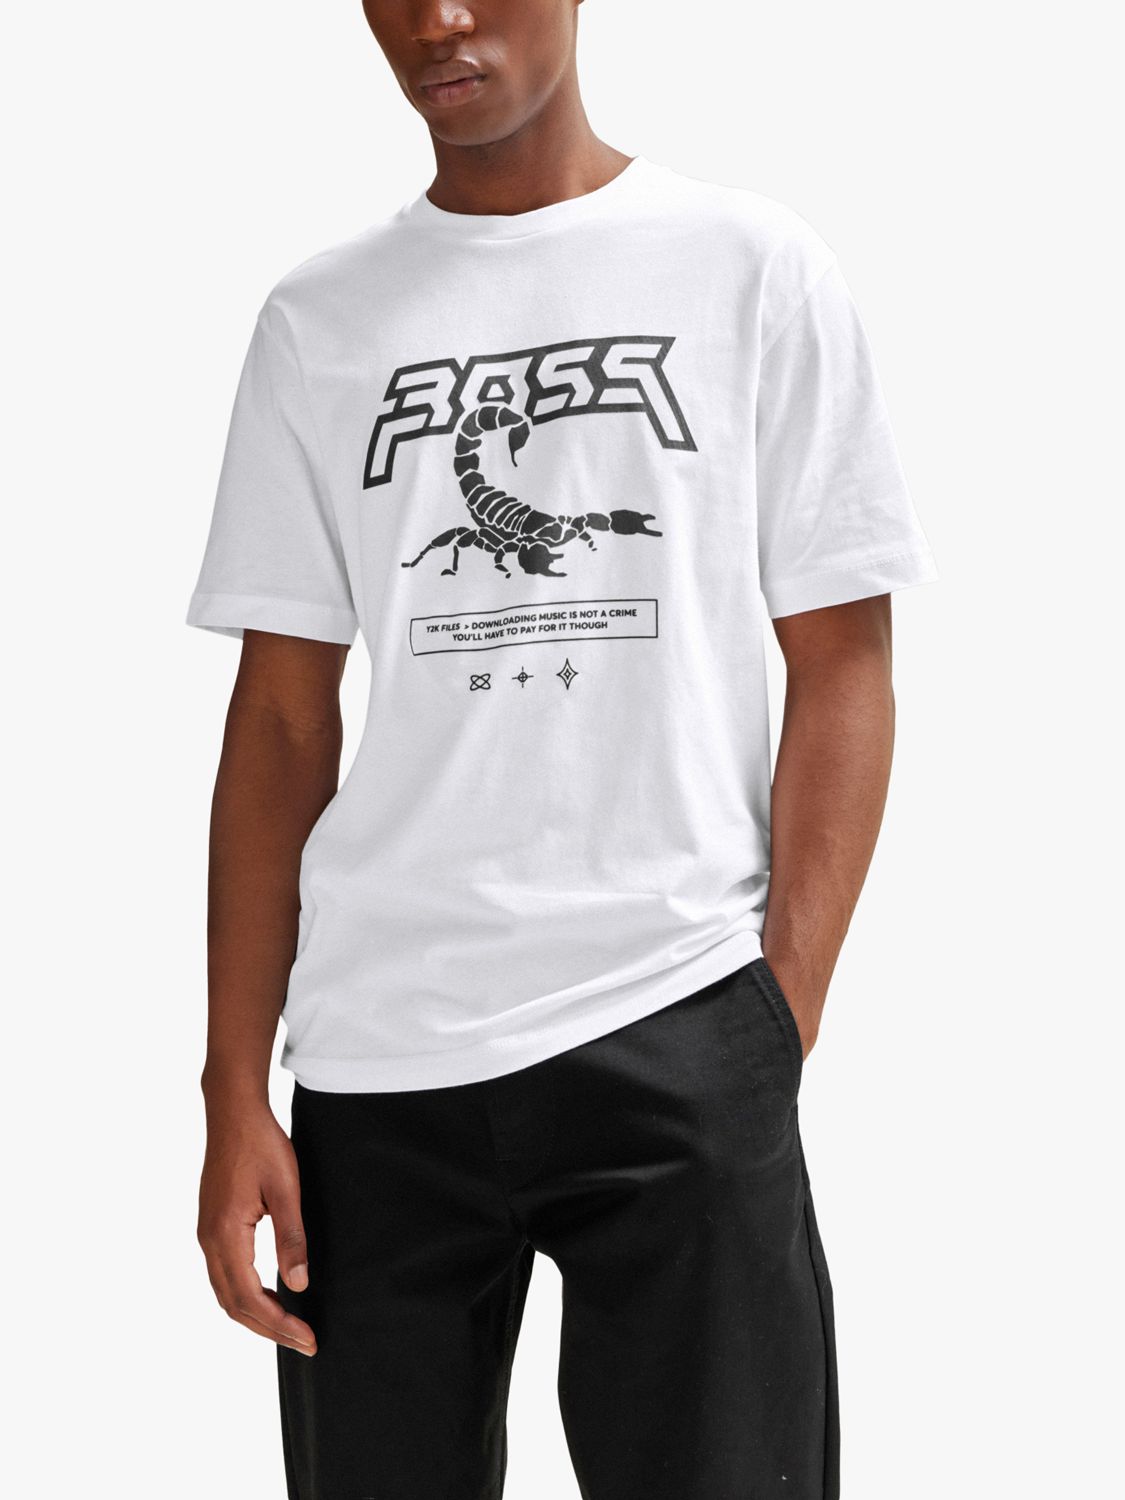 BOSS TeScorpion T-Shirt, White/Black, M